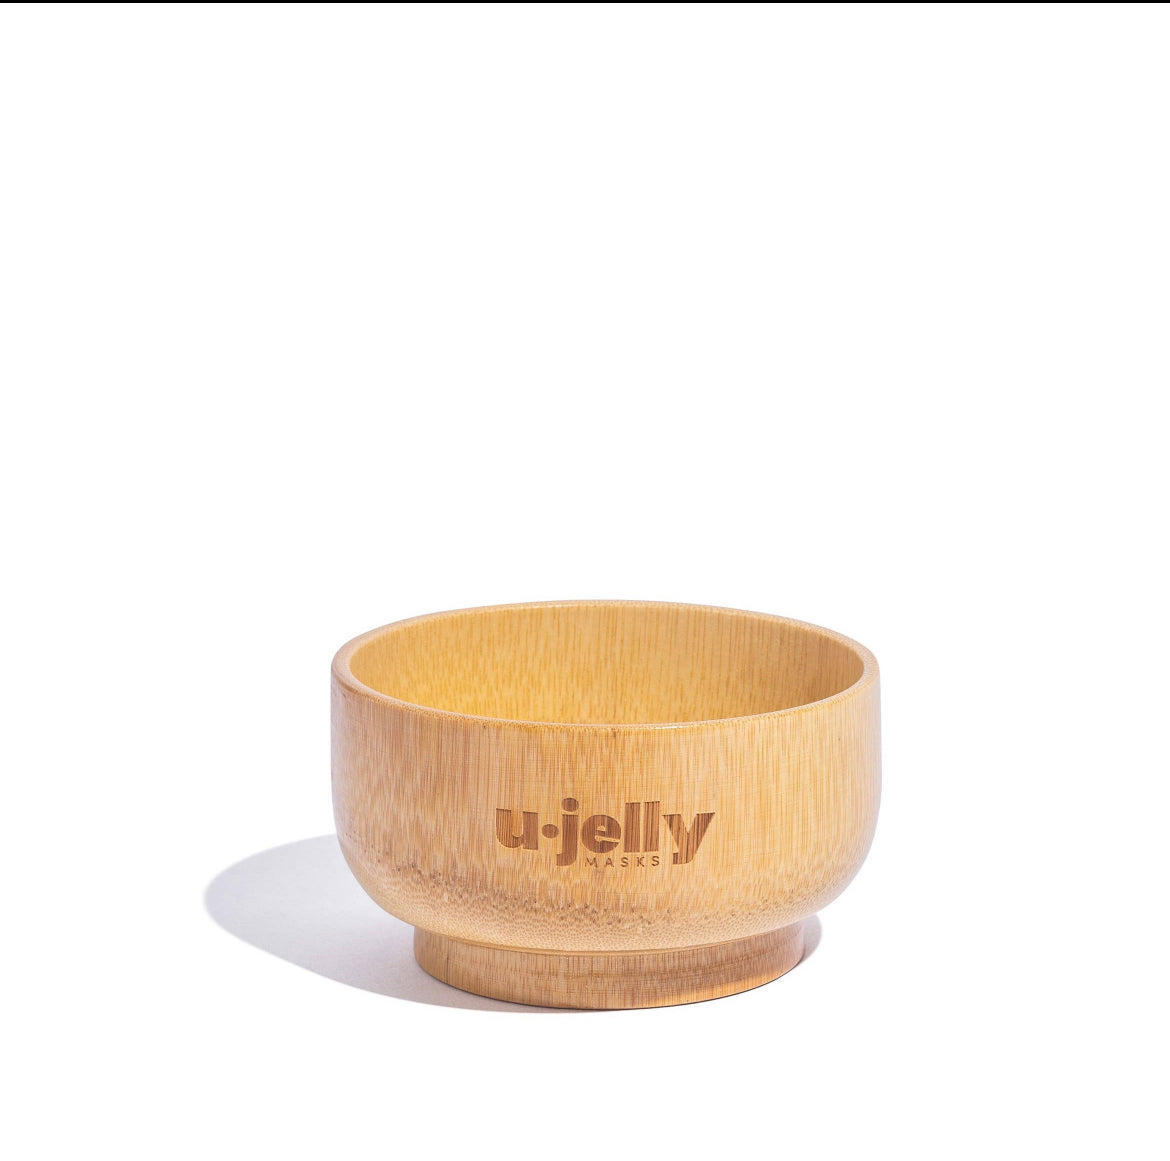 Jelly mask bowl